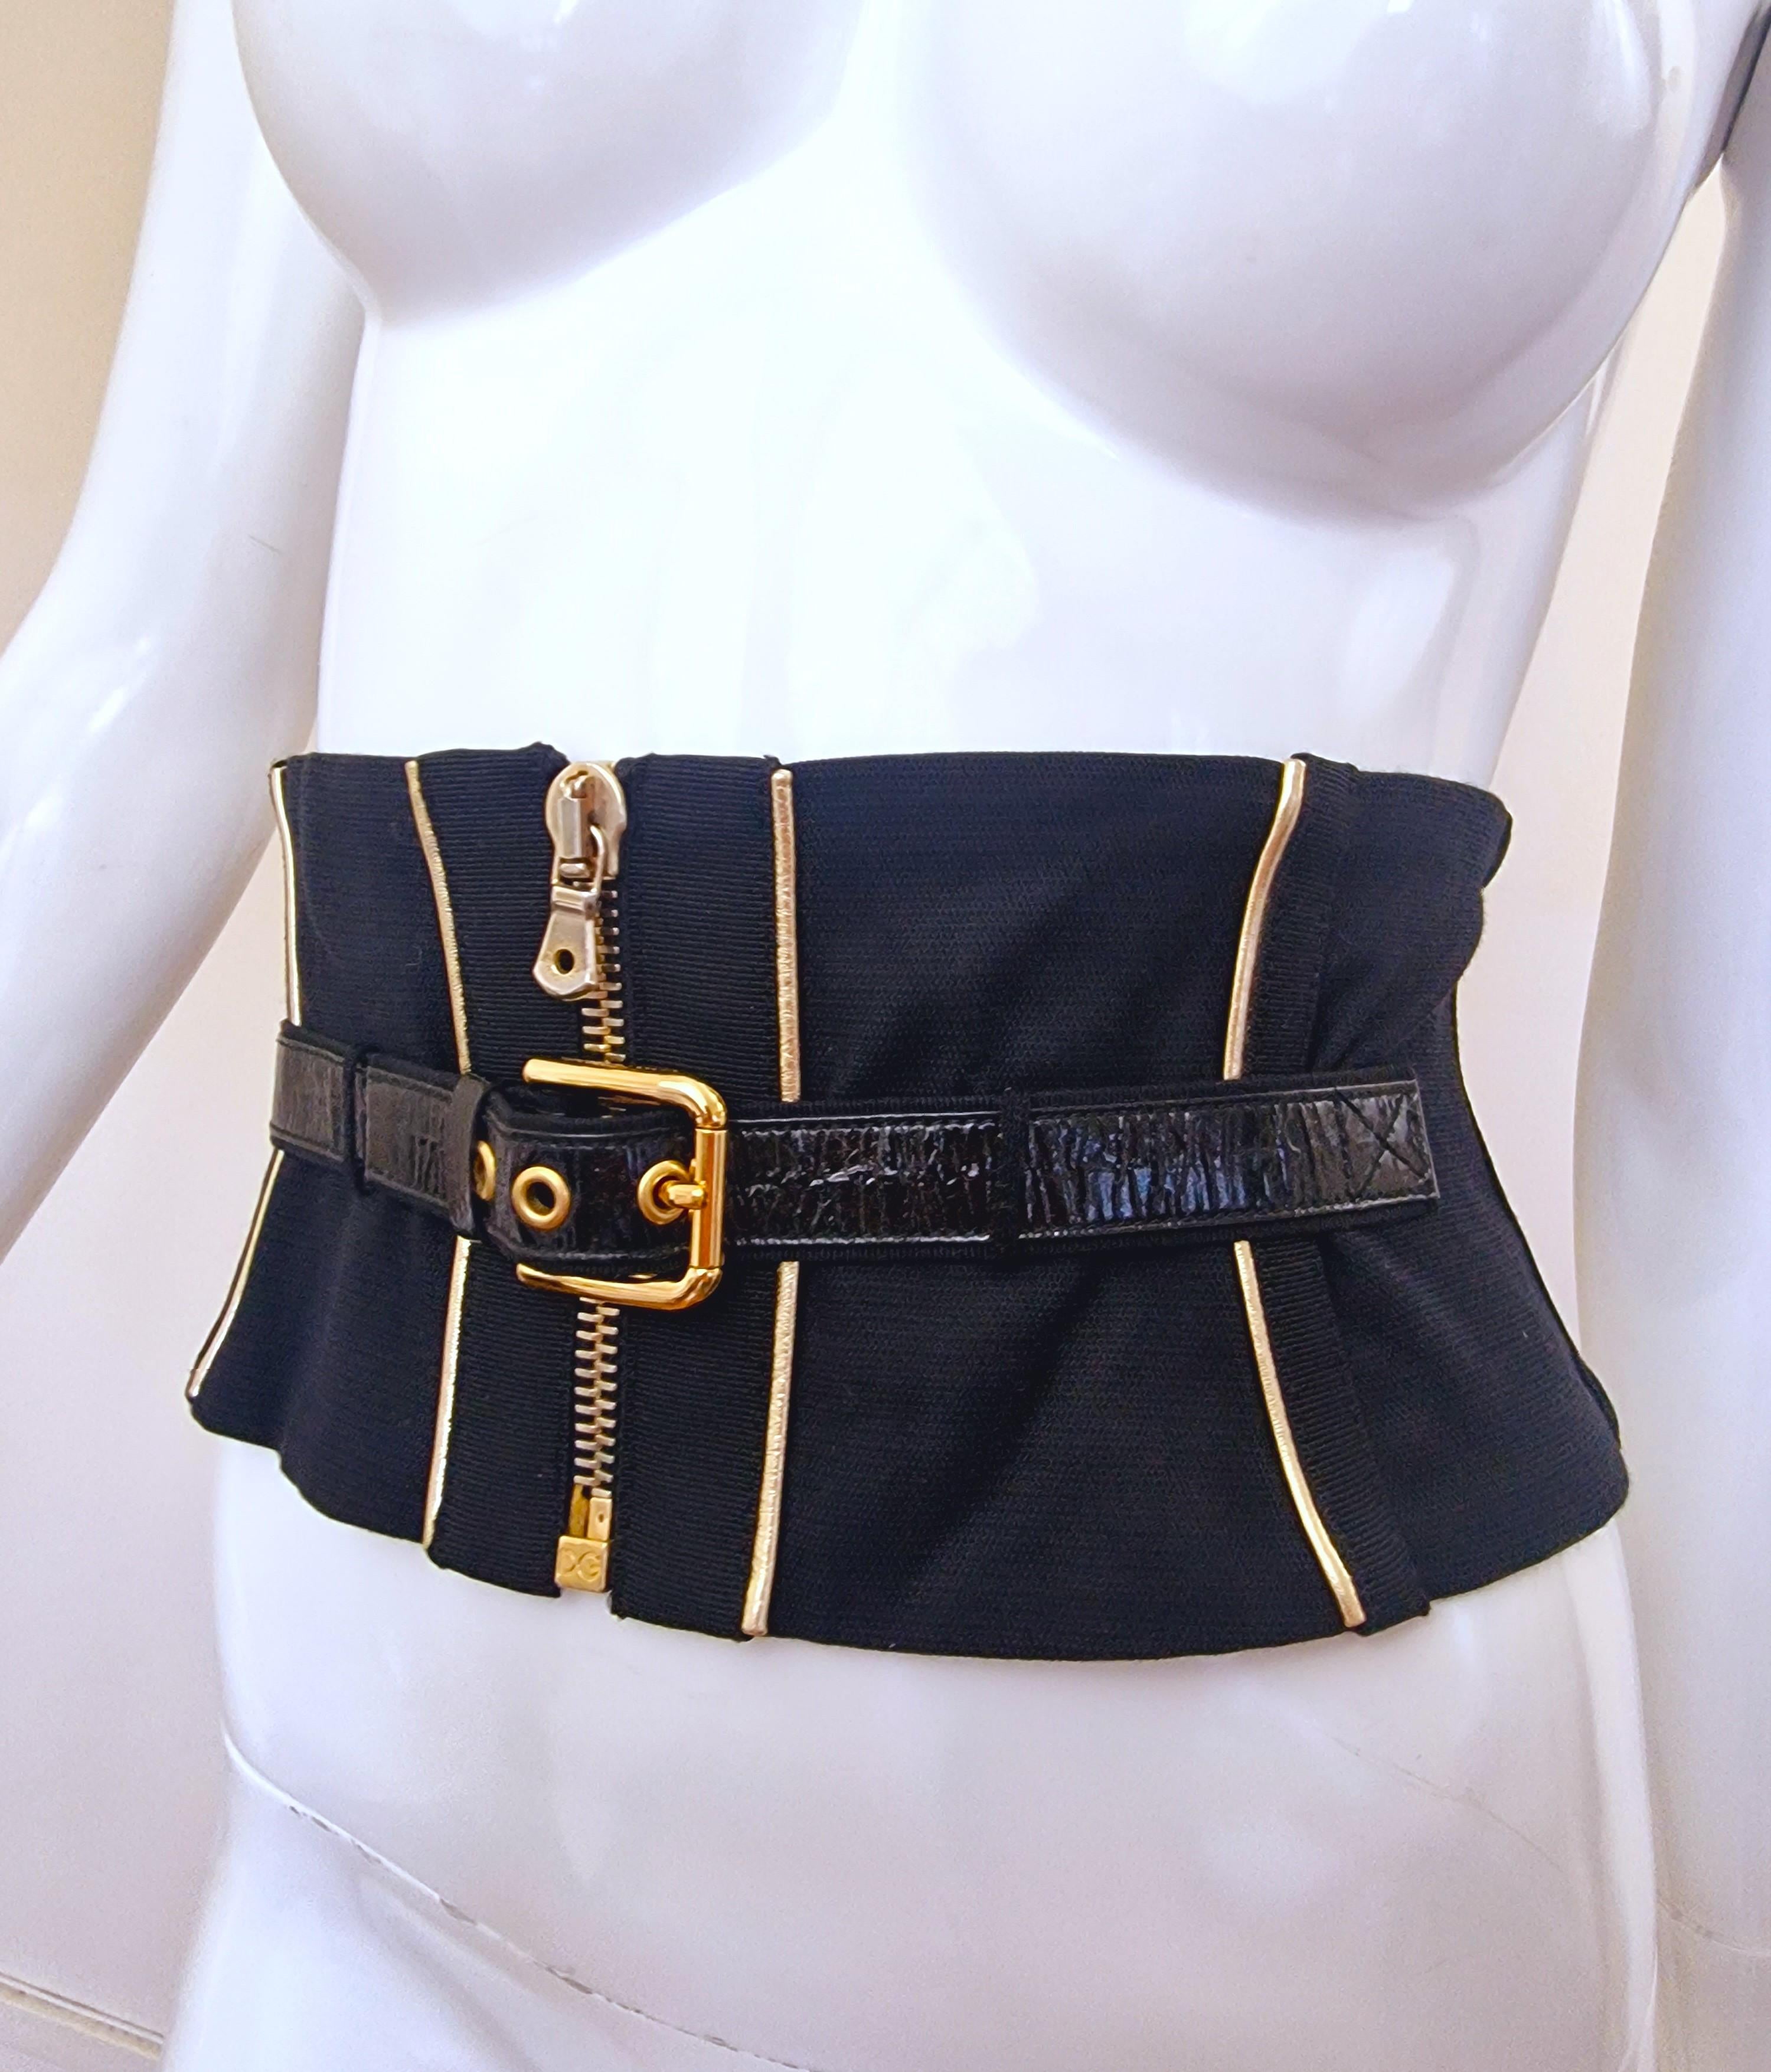 D&G Dolce and Gabbana Metal Leather Gold Bondage Black Bustier Top Corset Belt For Sale 2